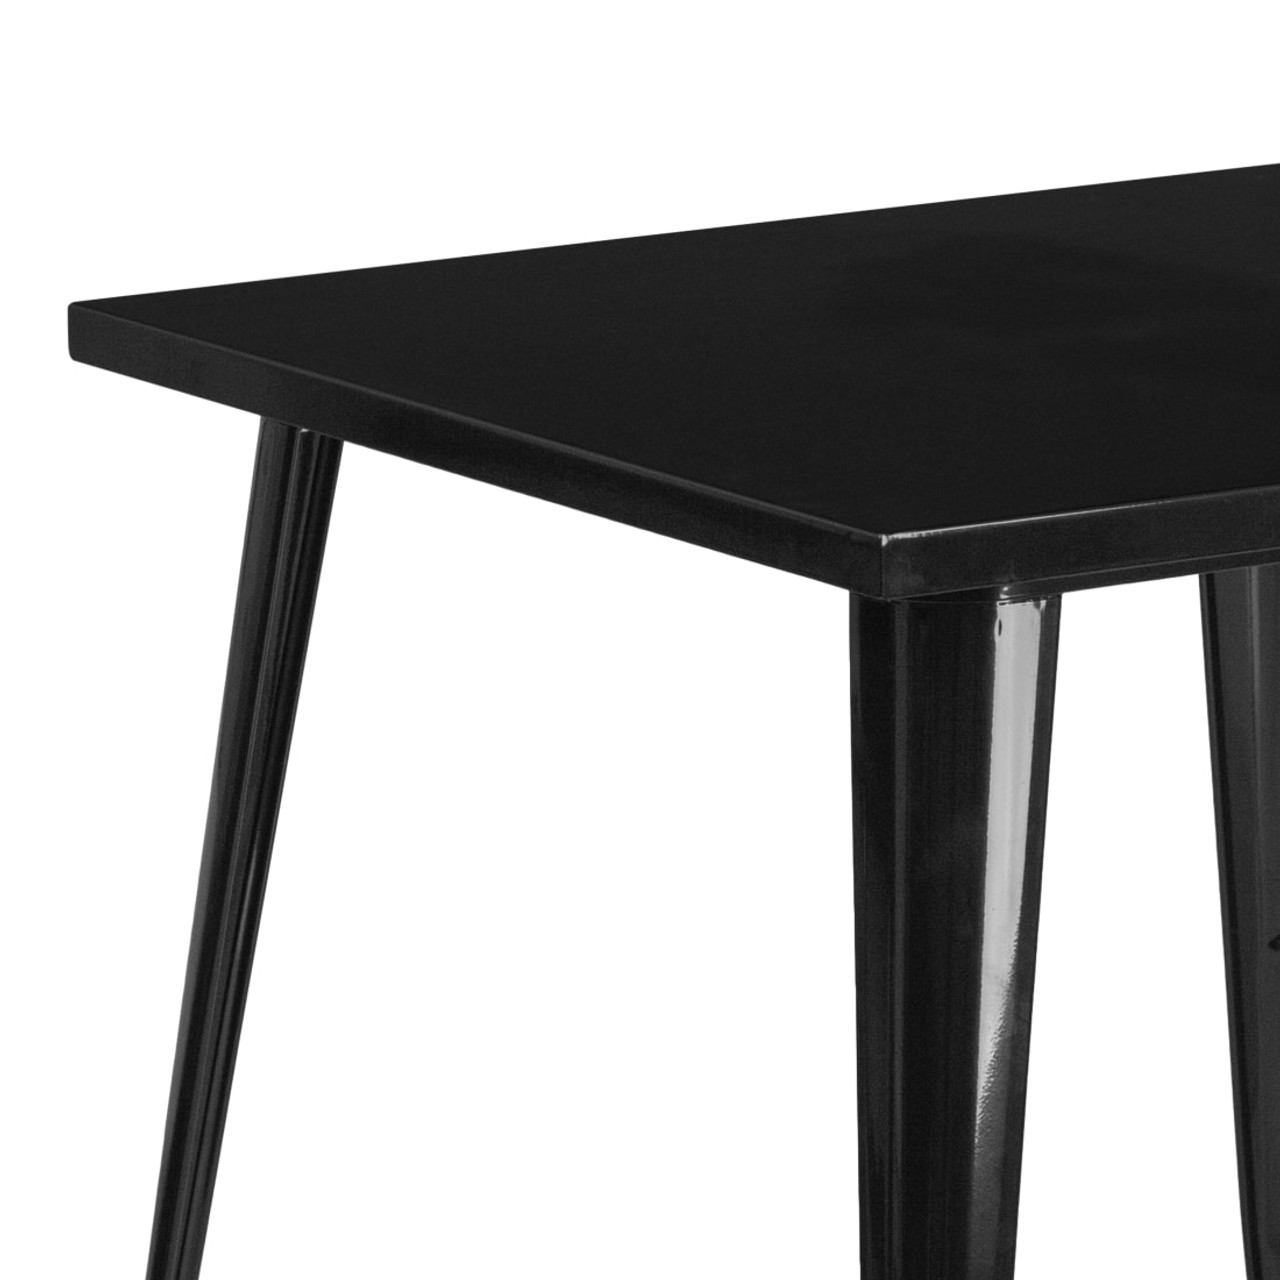 31.75” Square Black Metal Indoor-Outdoor Table